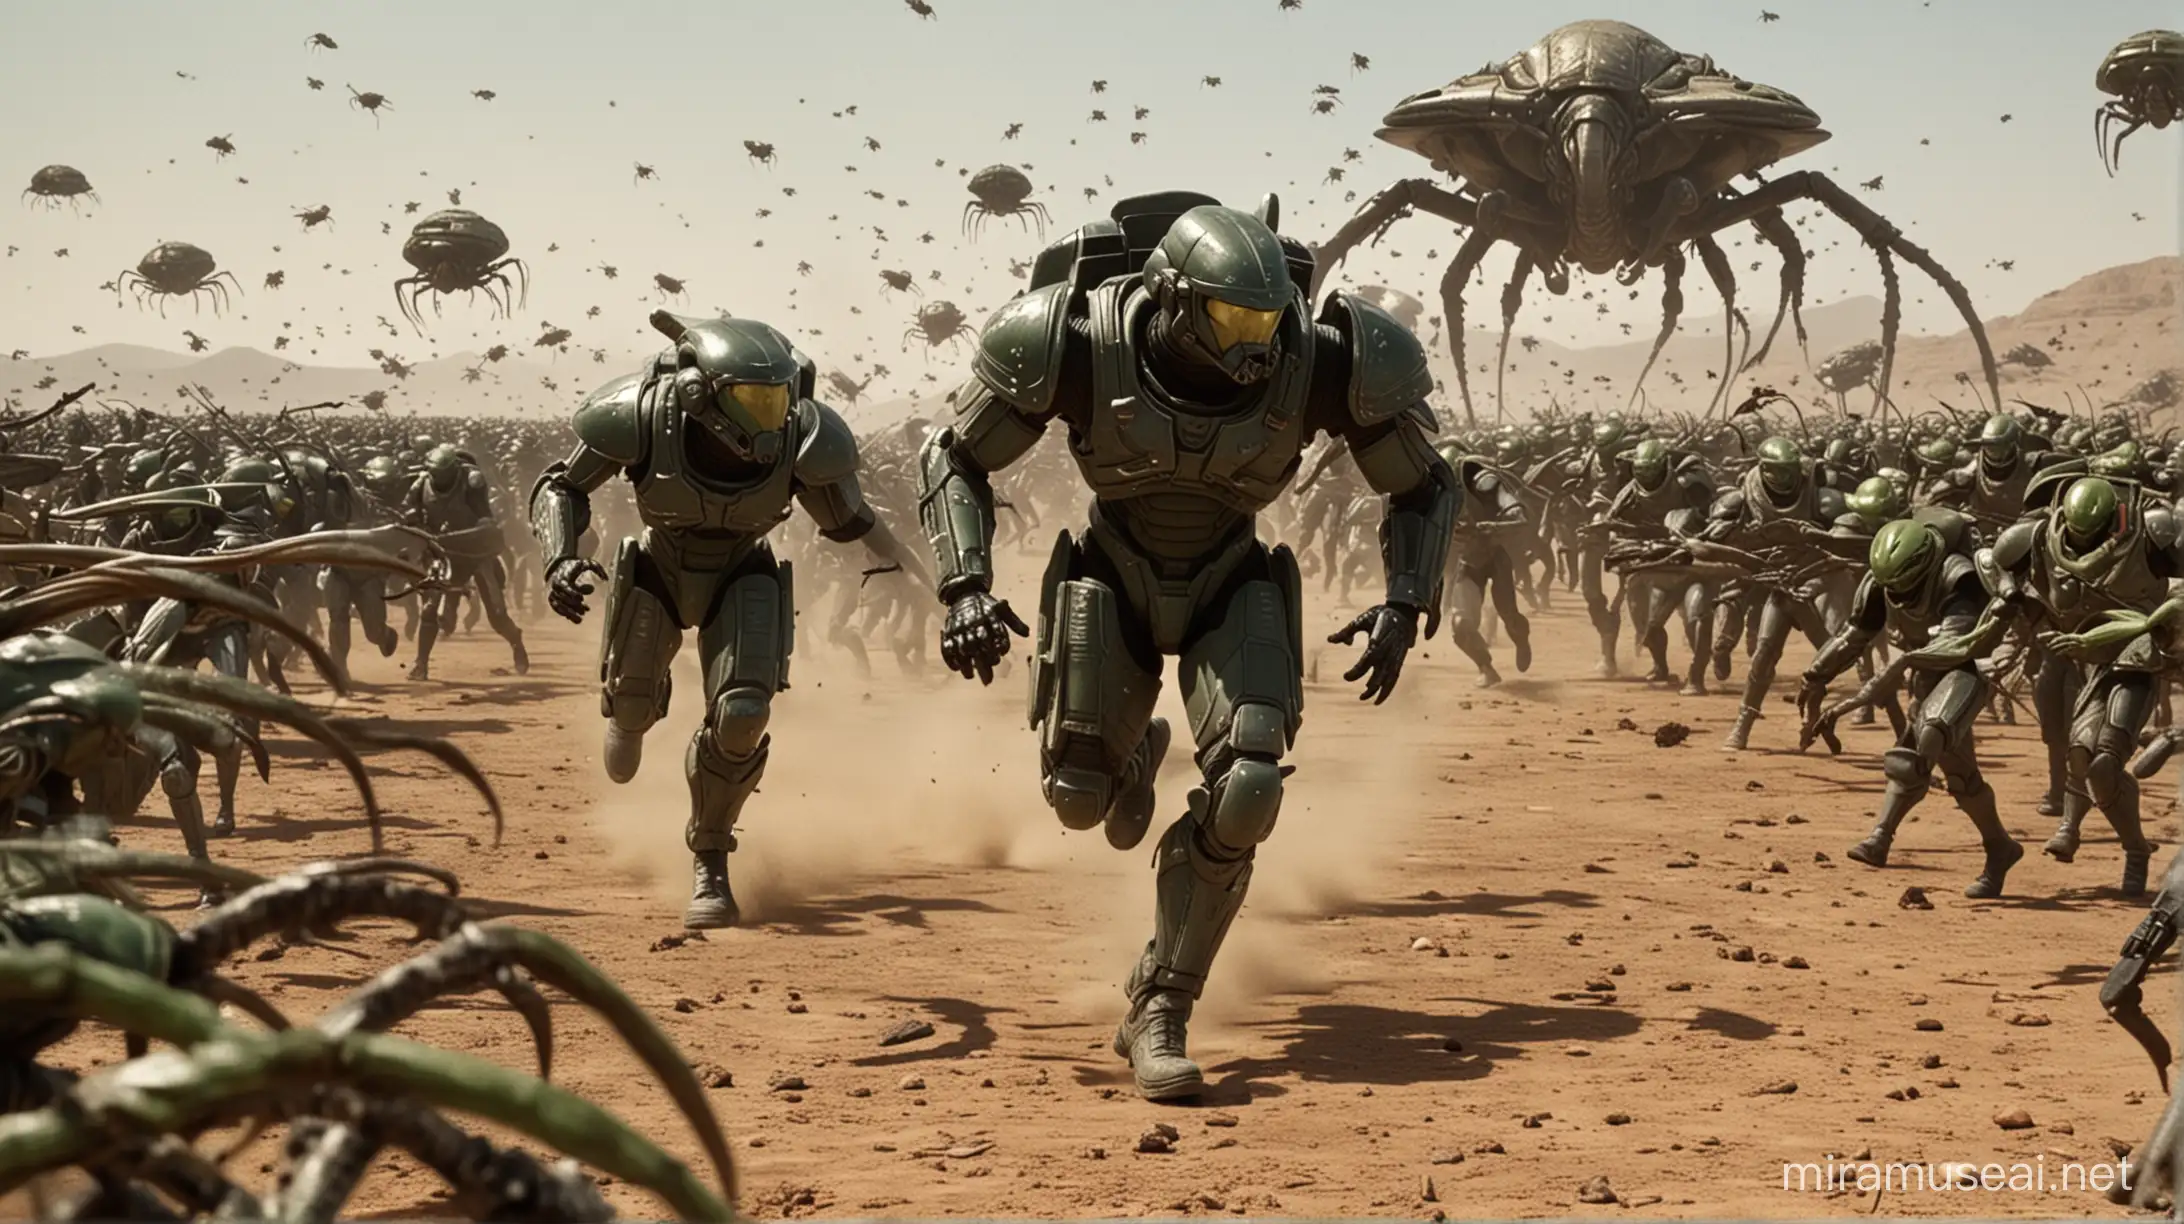 Fleeing Soldier Escapes Green Alien Bugs in Intergalactic Battle